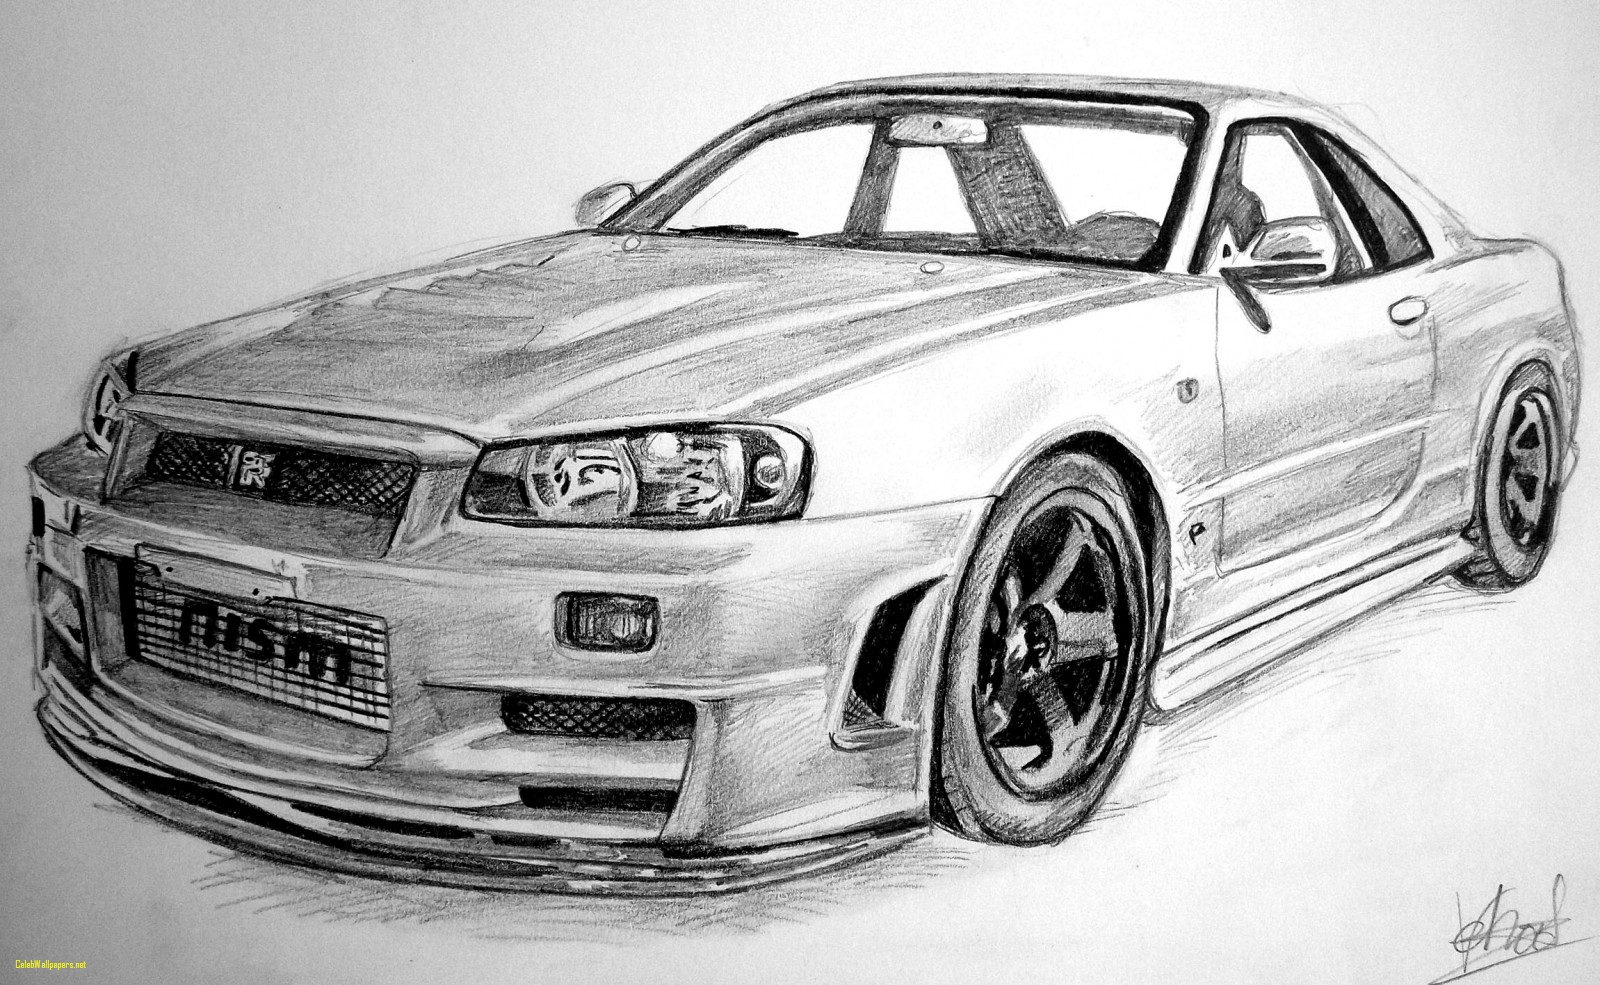 Car Pencil Drawing at PaintingValley.com | Explore ...